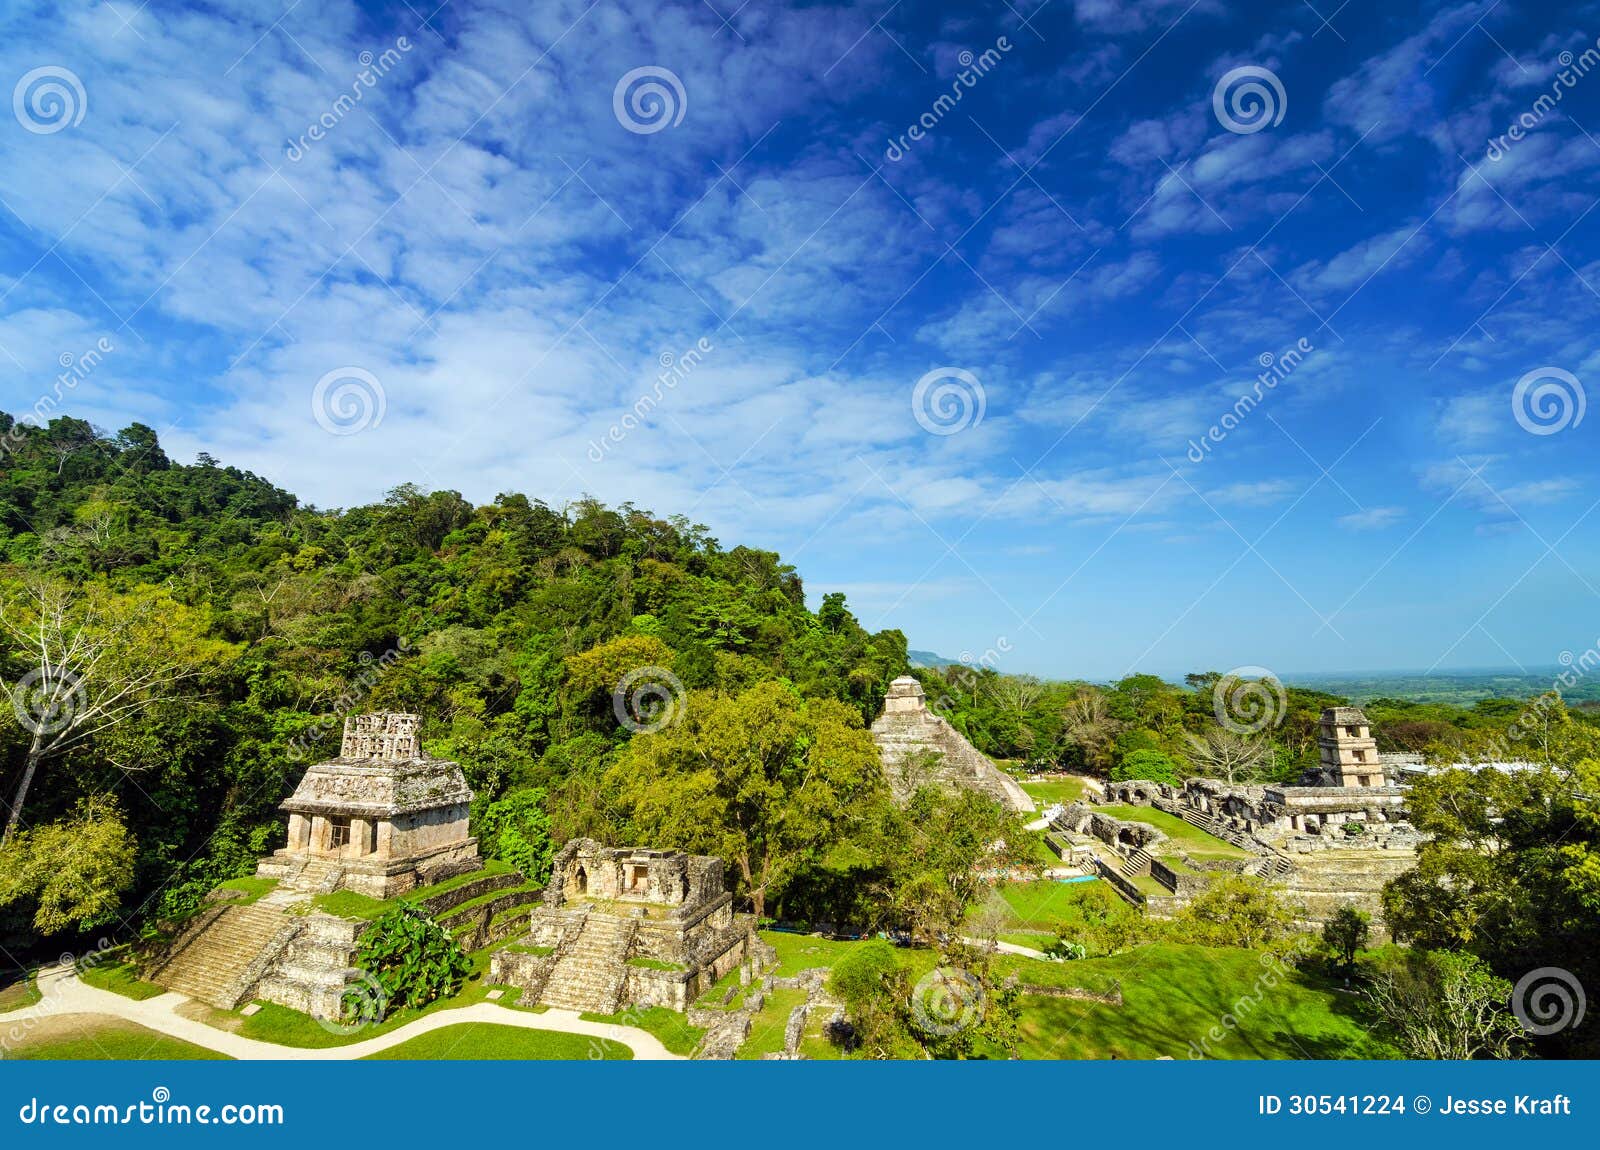 palenque view